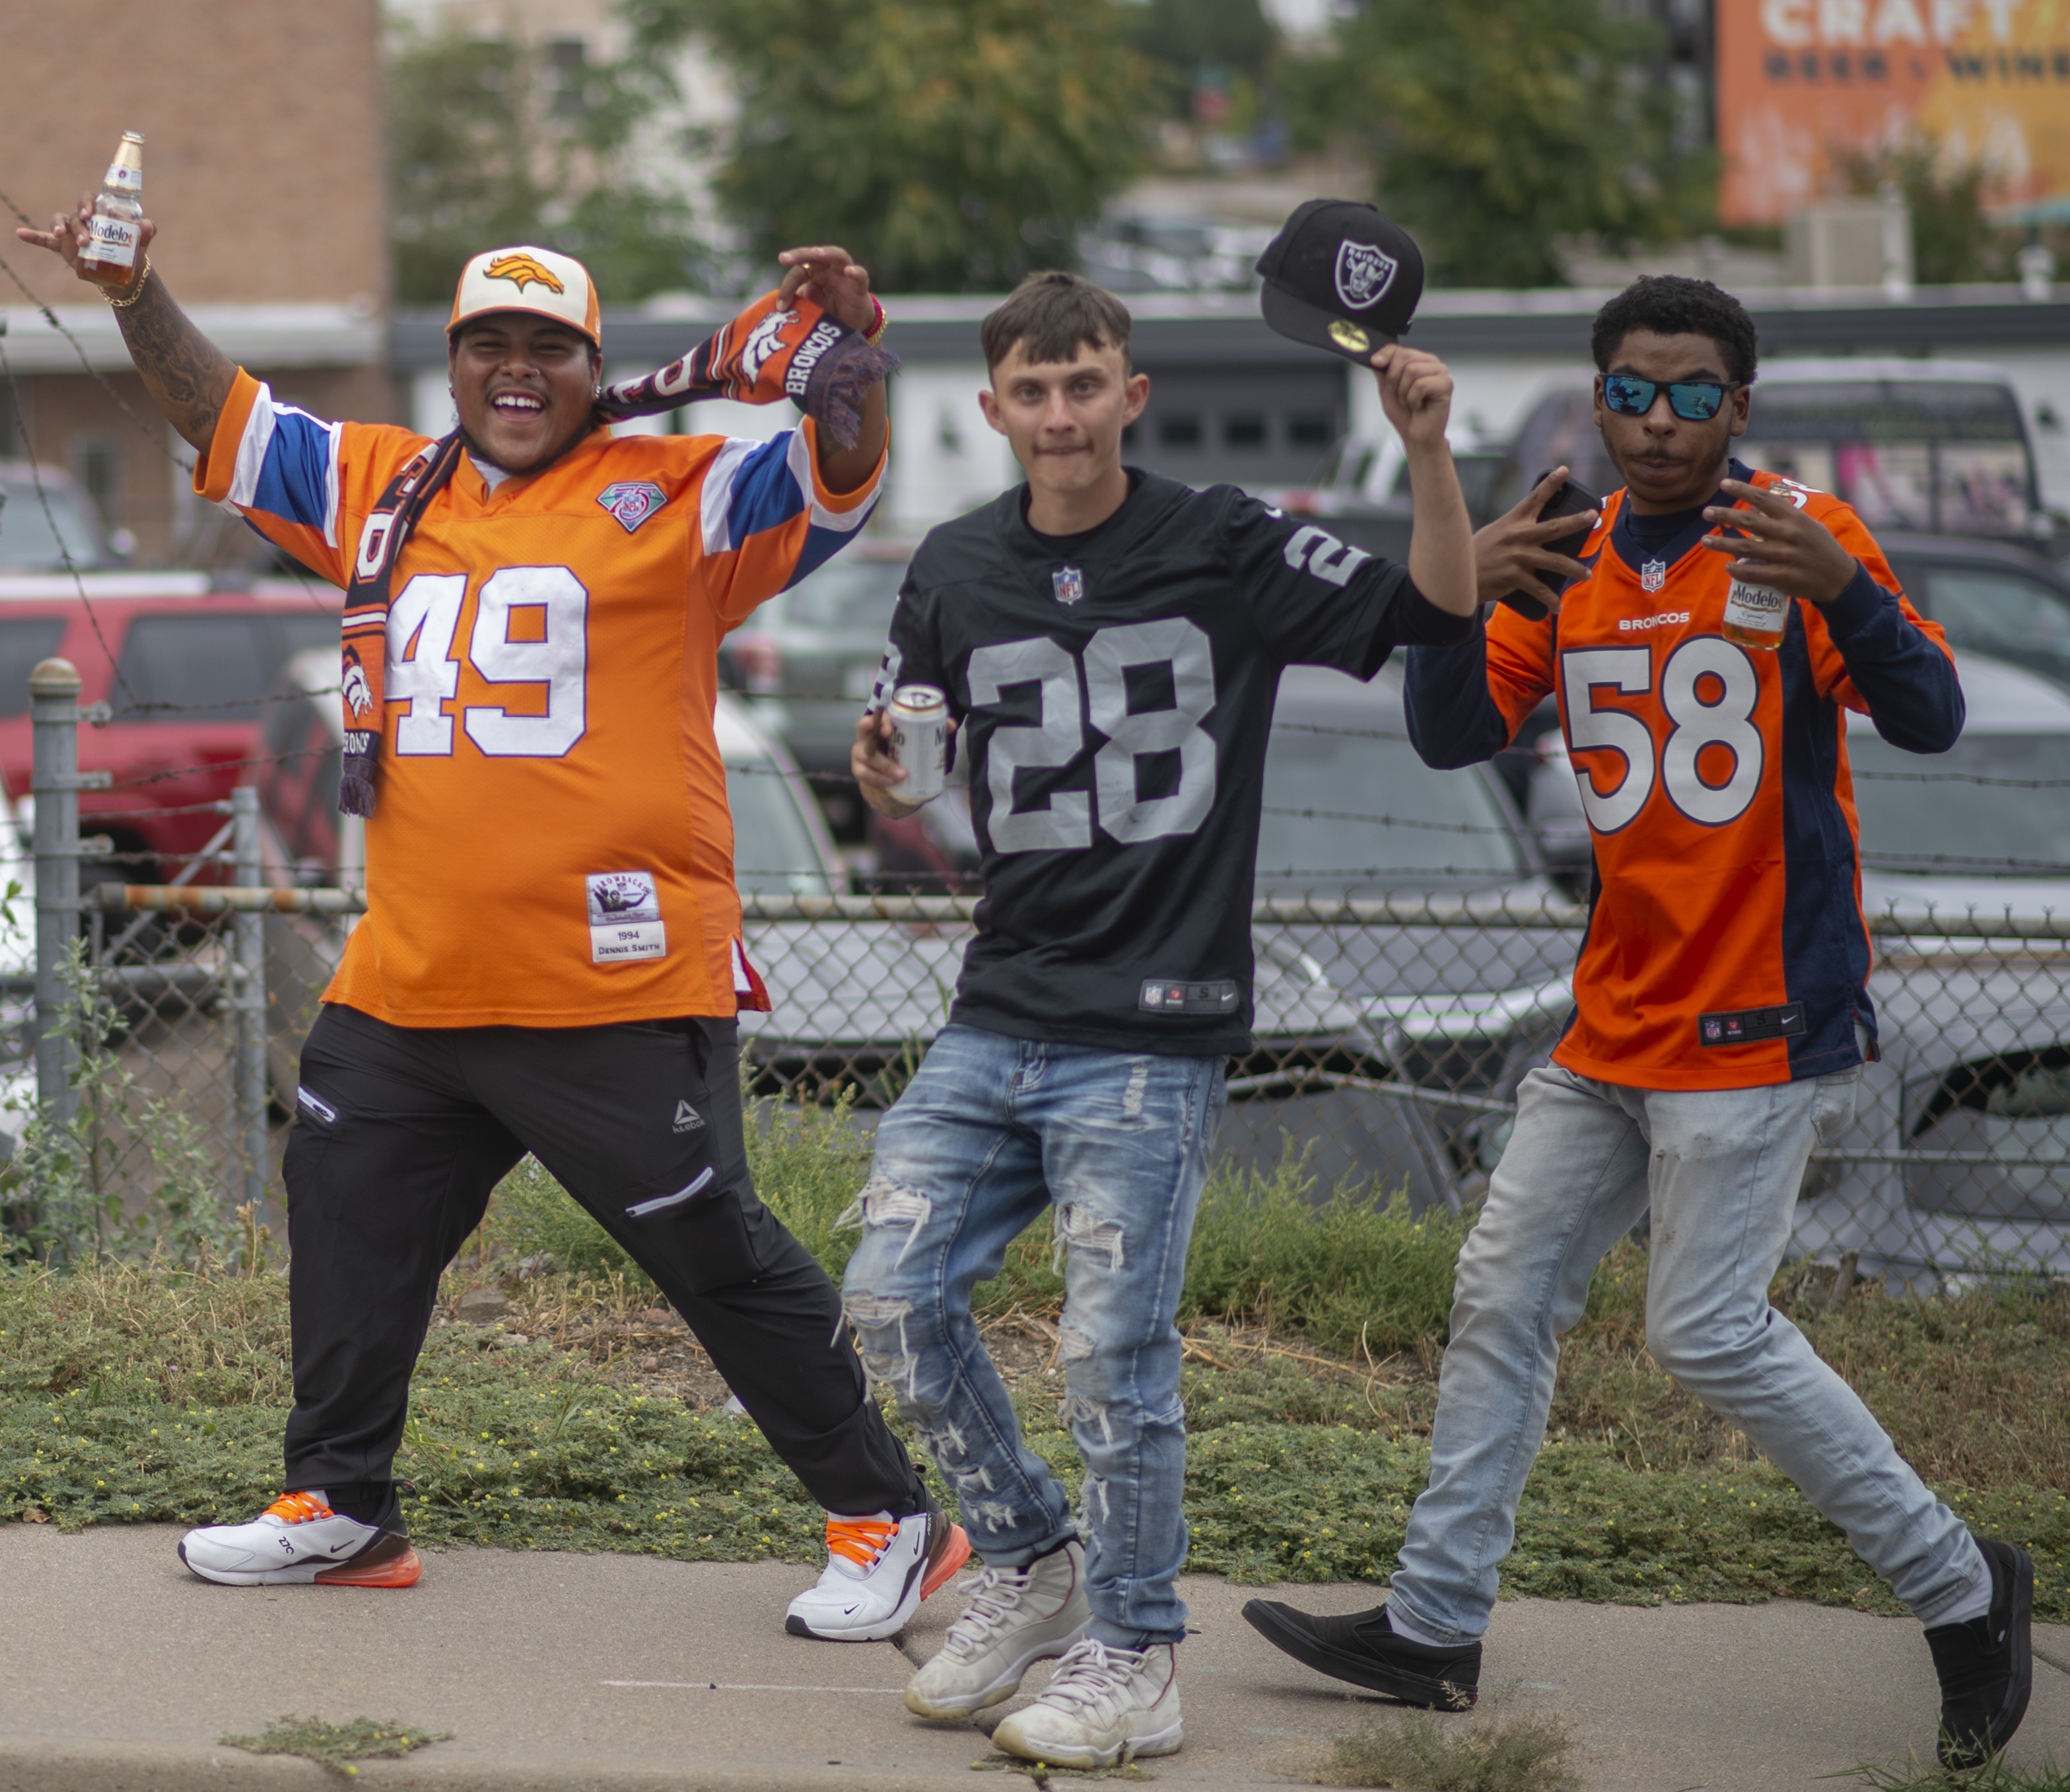 Photos: Denver Broncos Fans Make Their Way to Mile High Stadium